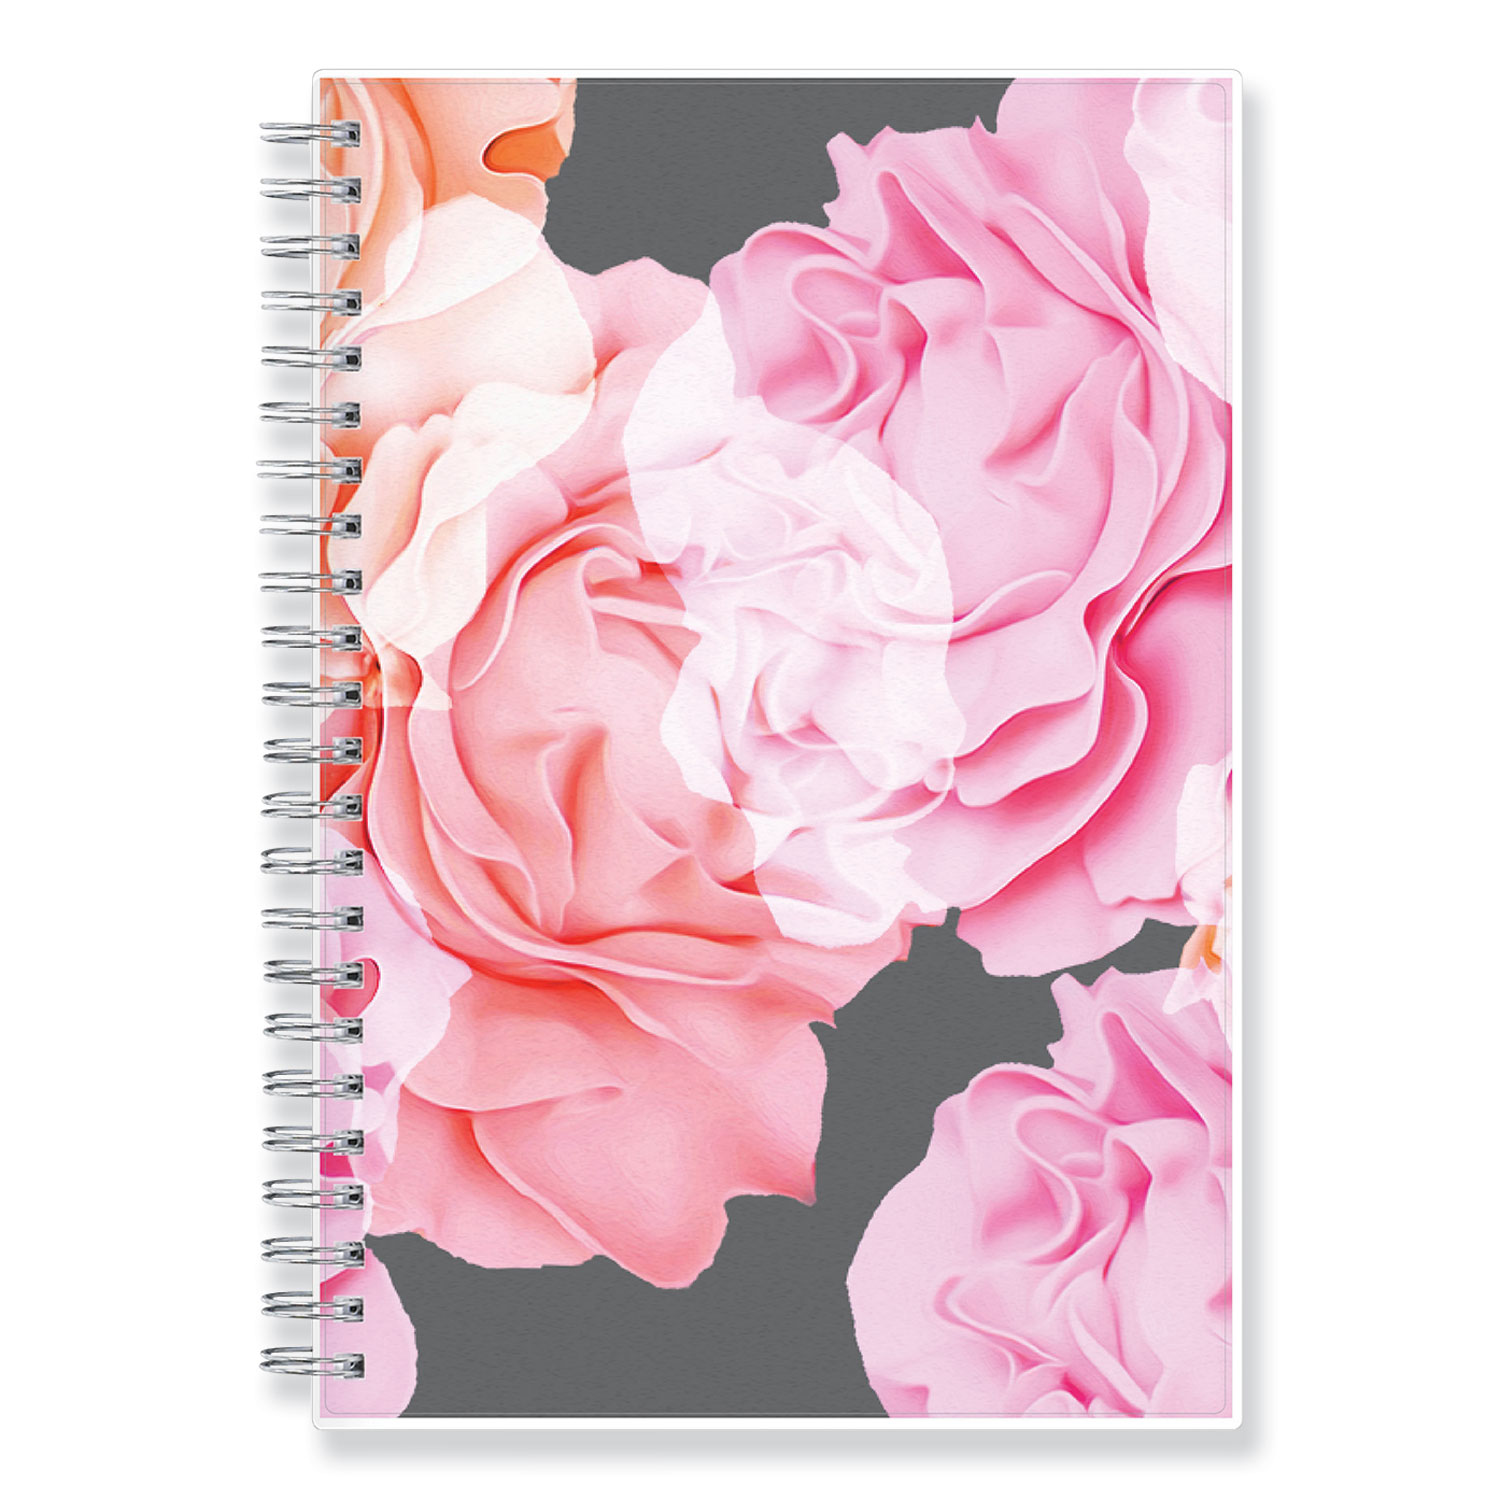 Joselyn Weekly/Monthly Wirebound Planner, 8 x 5, Light Pink/Peach/Black, 2020